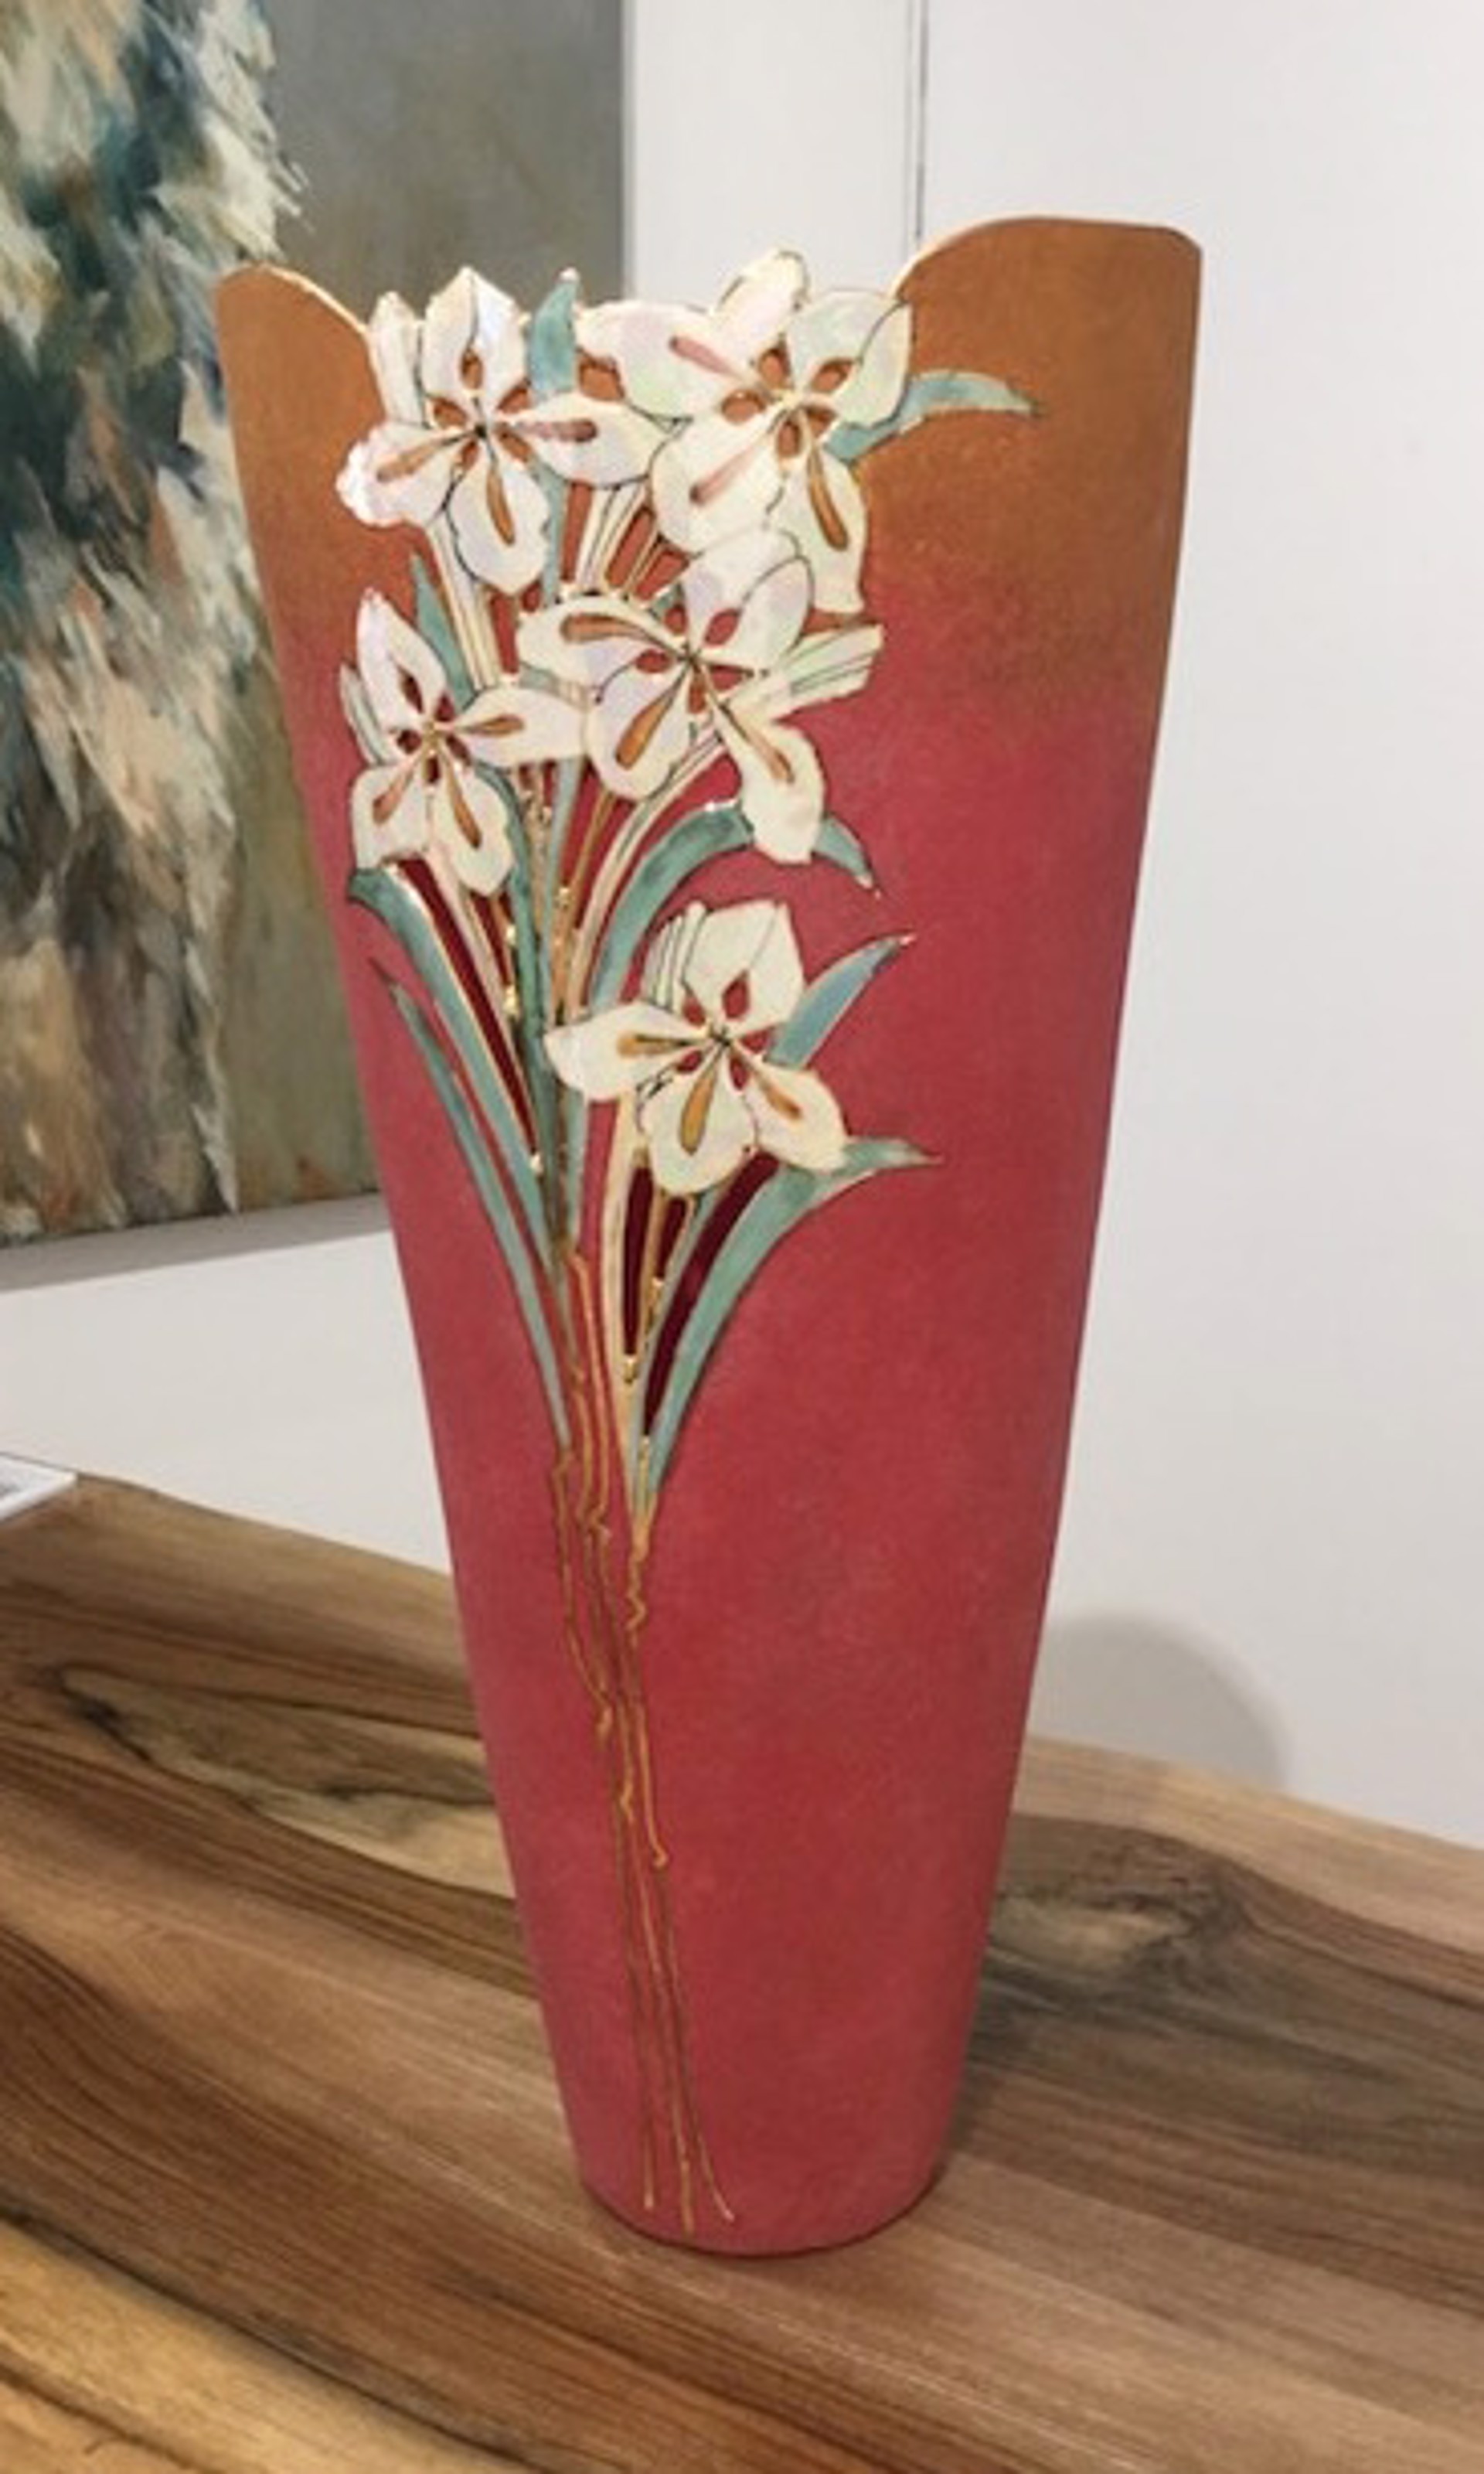 Large Gallery Floor vase -  Fire bird red -commission by Jan Phelan